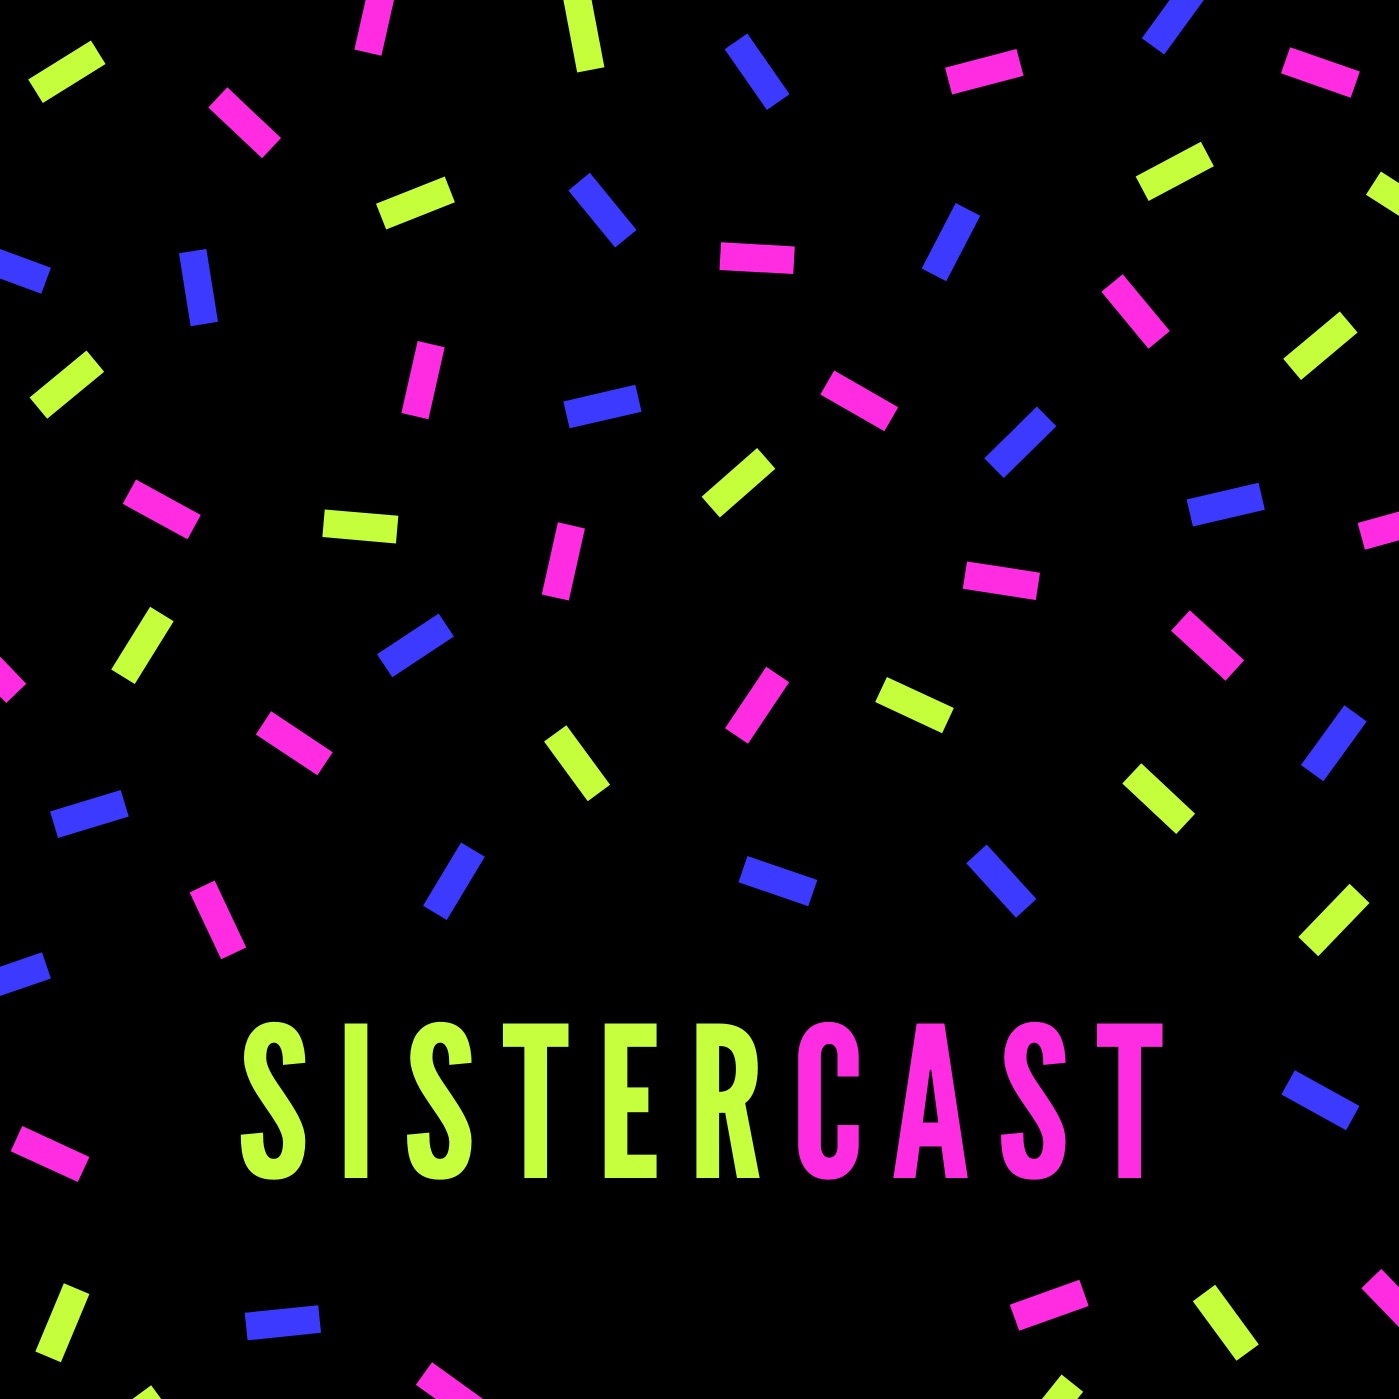 Sistercast